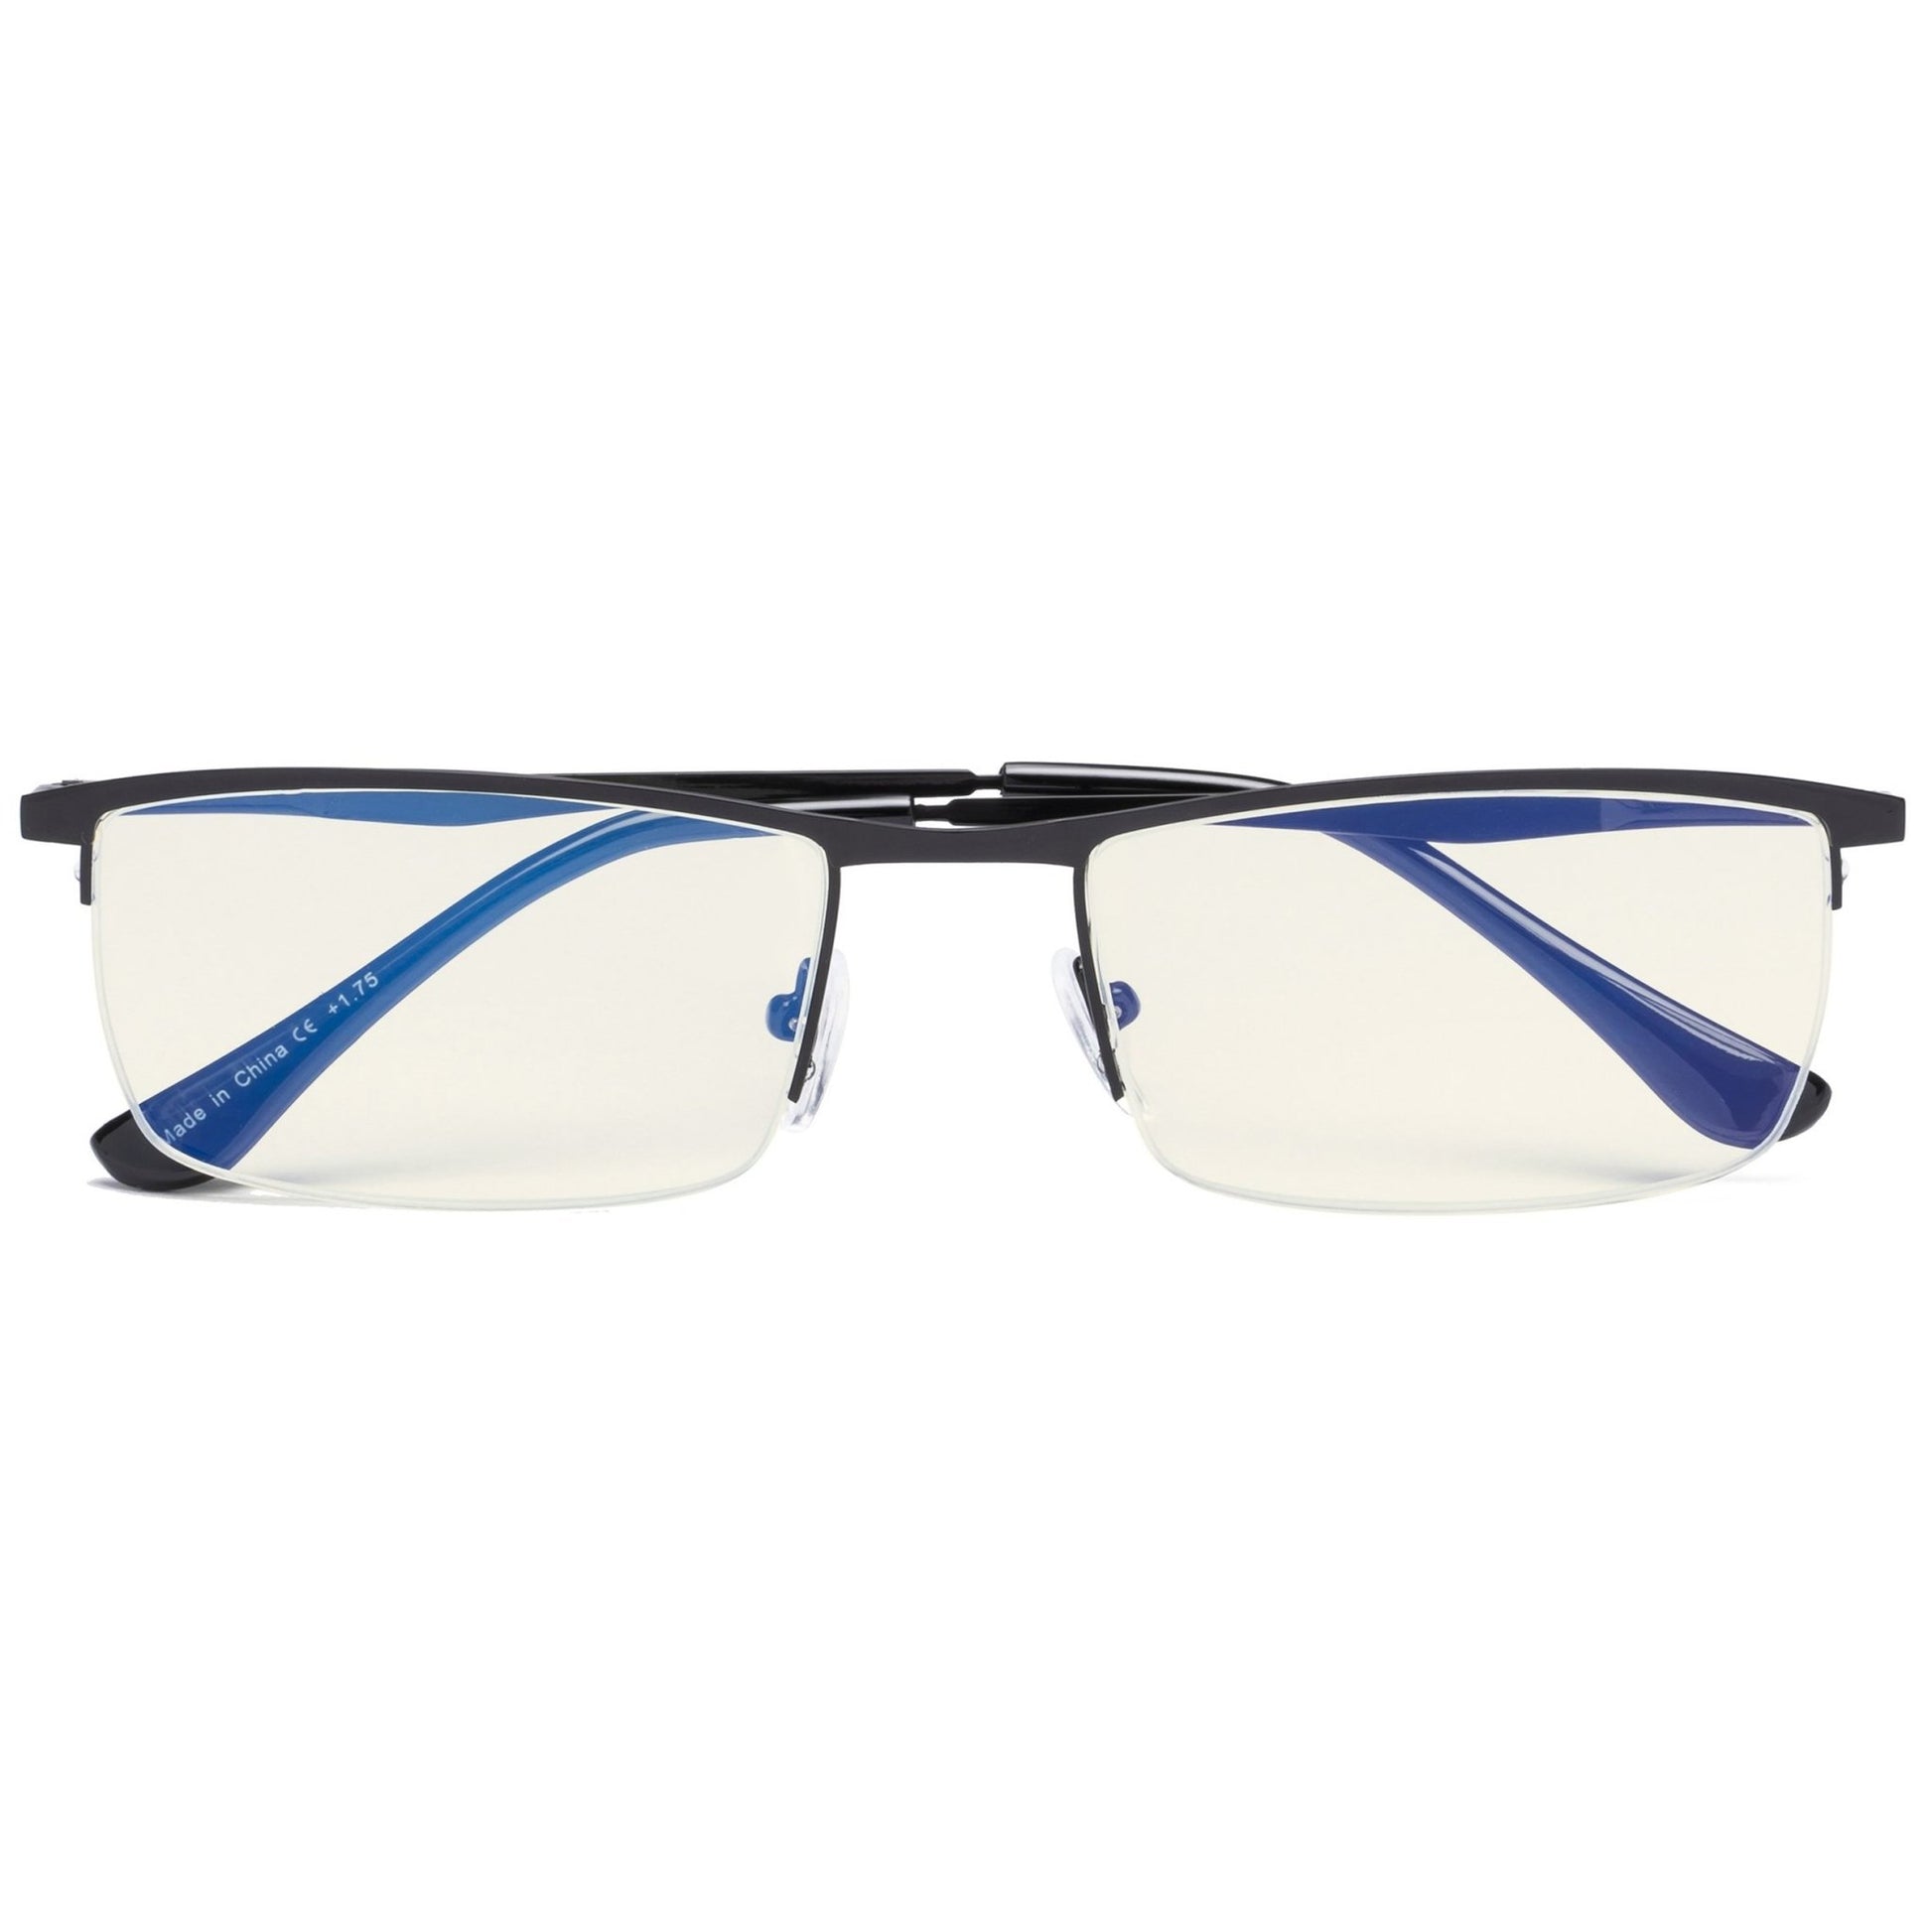 Acrylic Frame Anti-blue Light Glasses